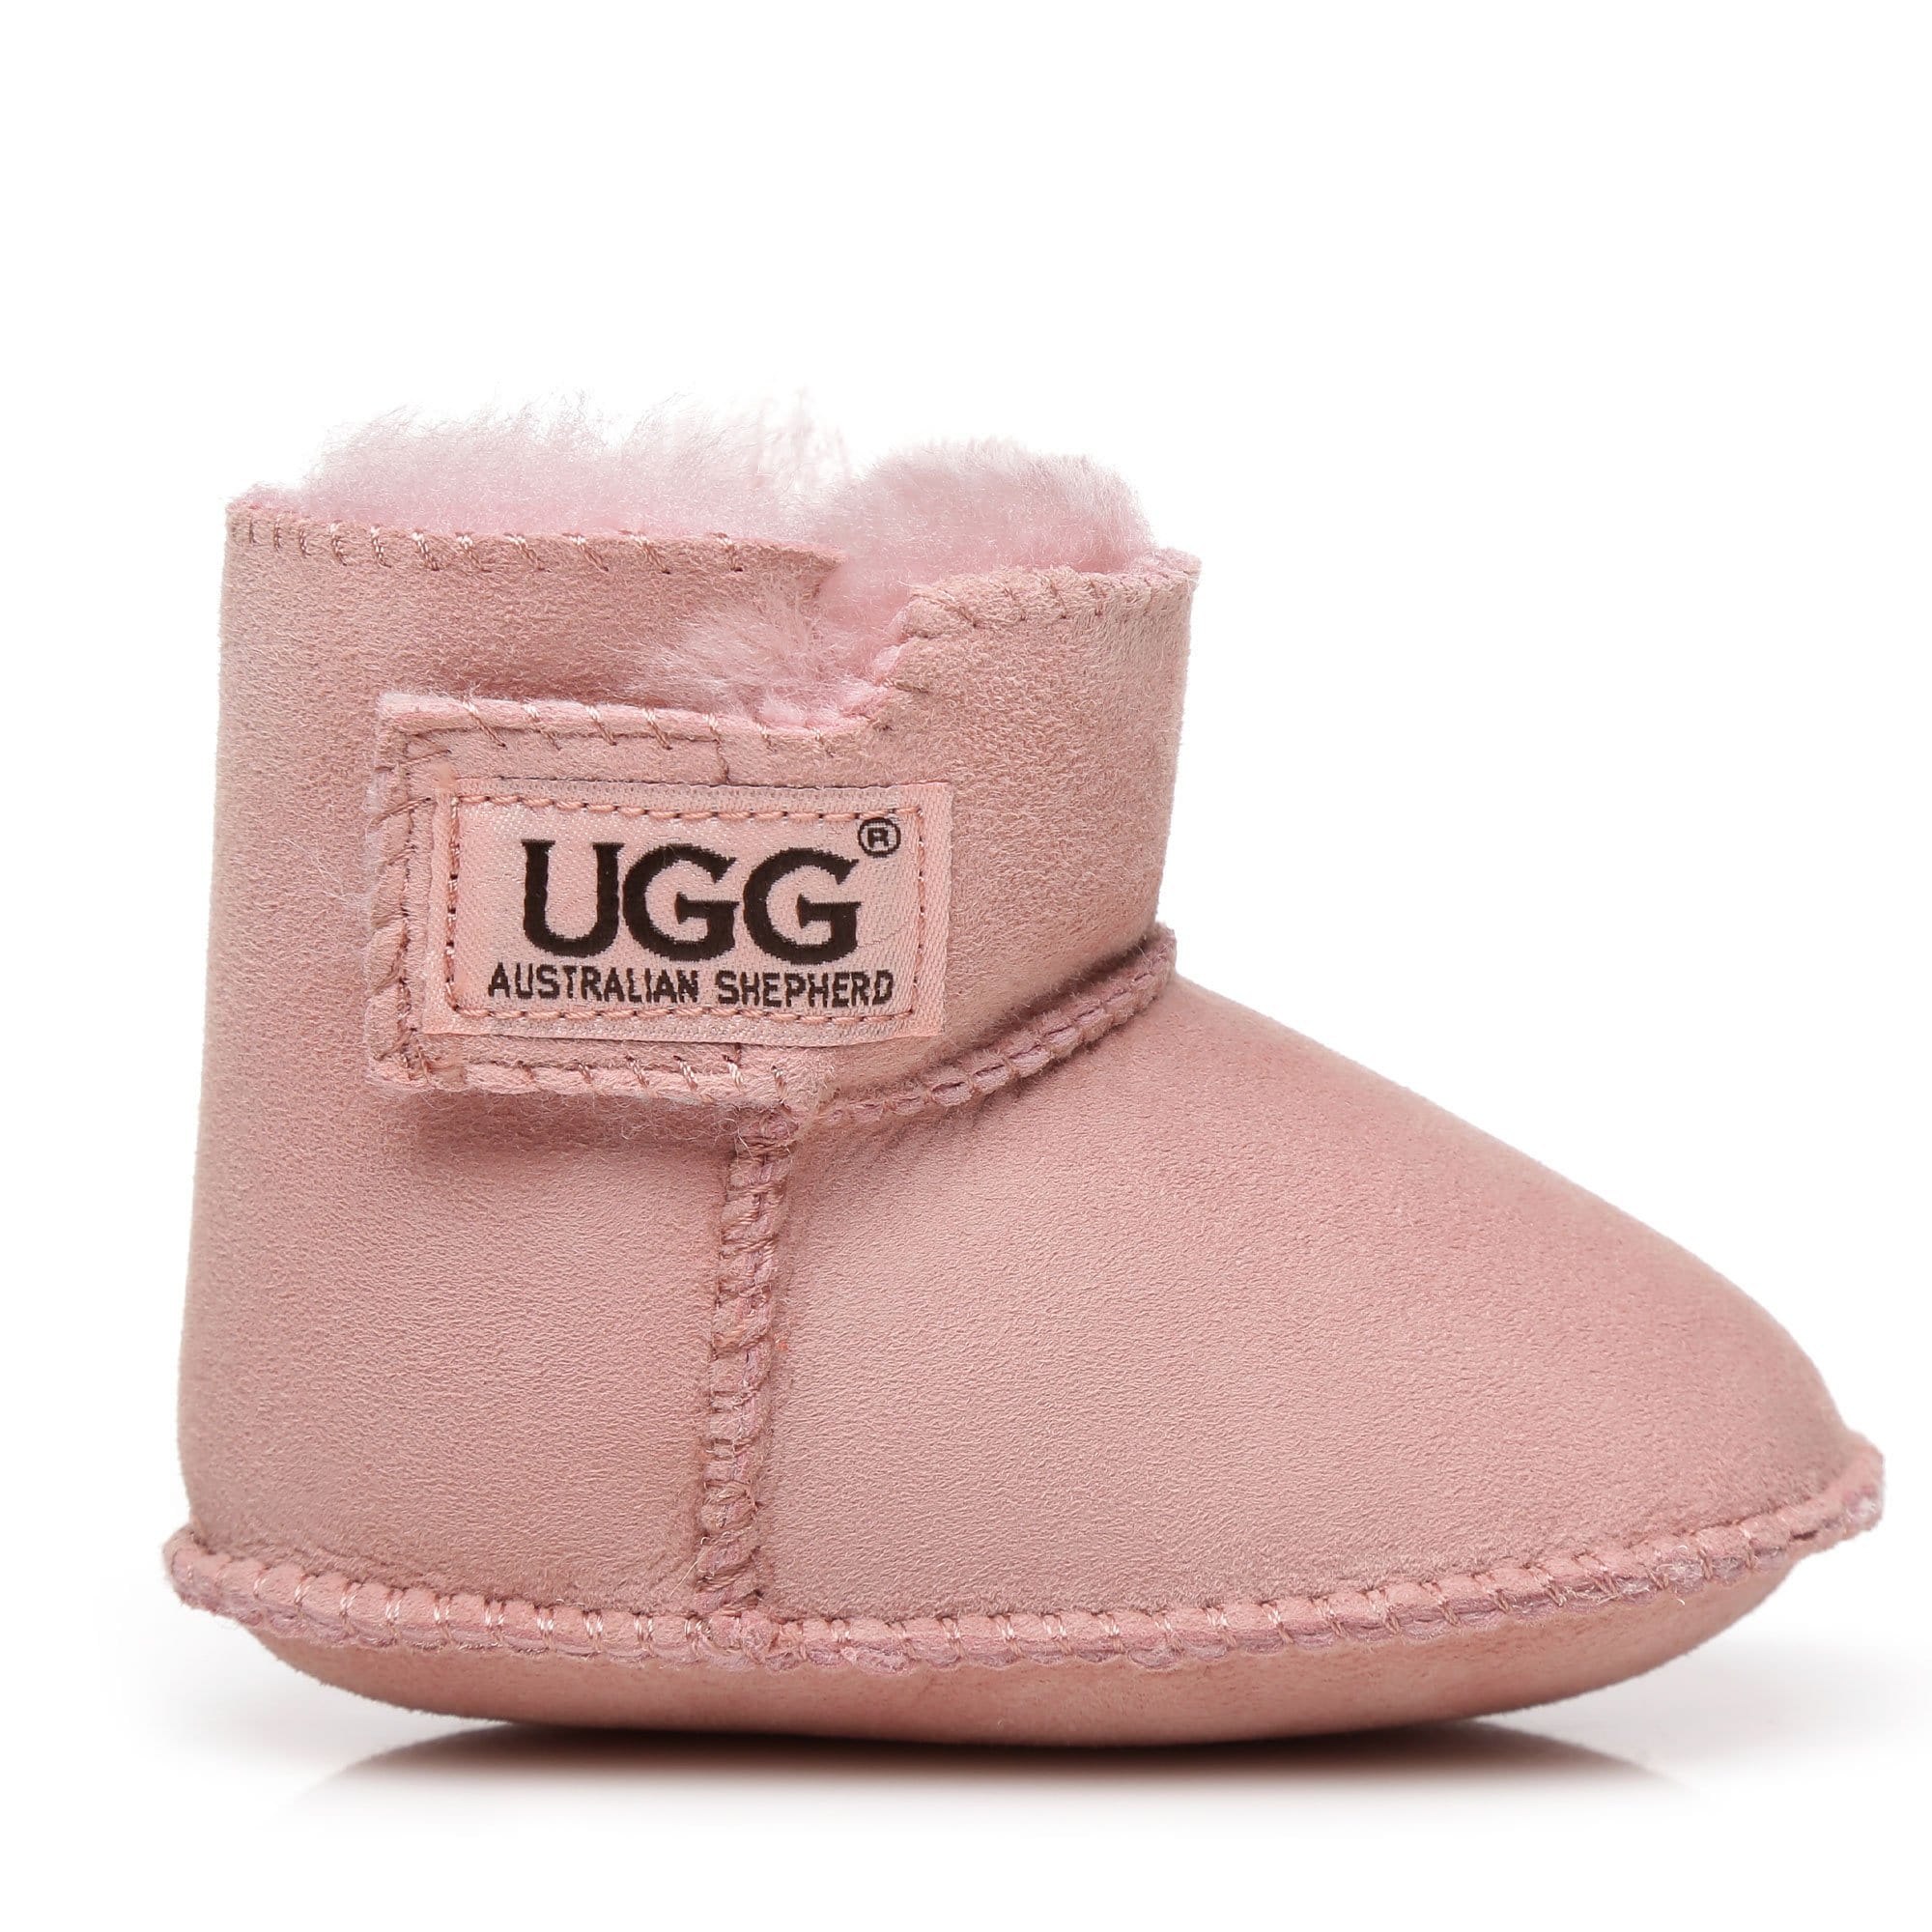 UGG Baby Boots – Original UGG Classic